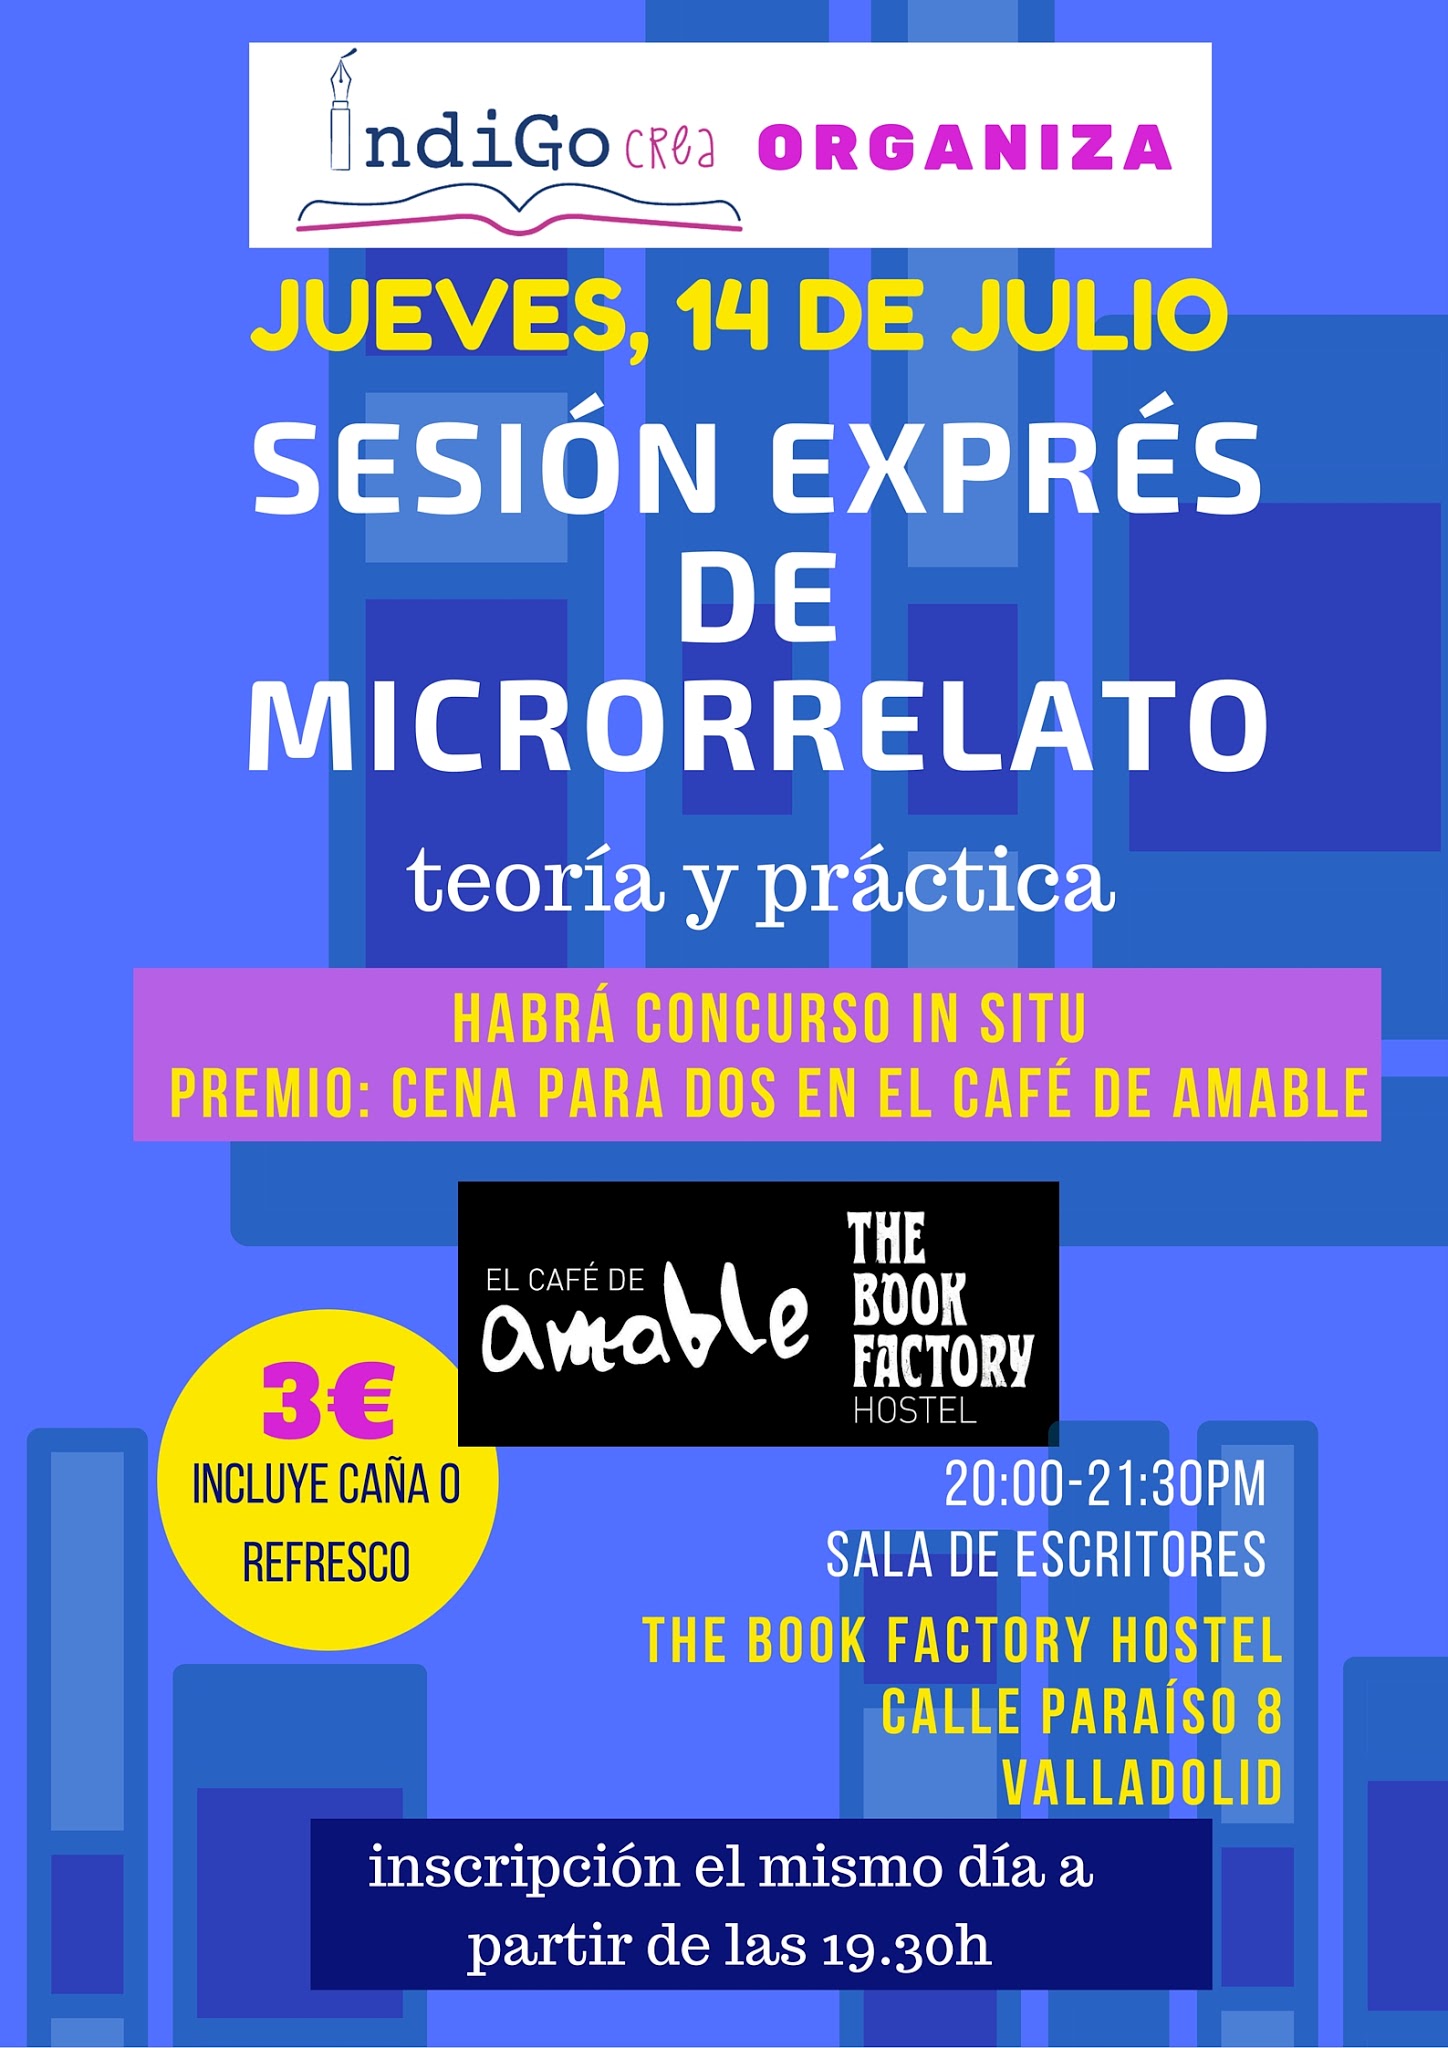 Jornada Microrrelato express en The Book Factory Hostel